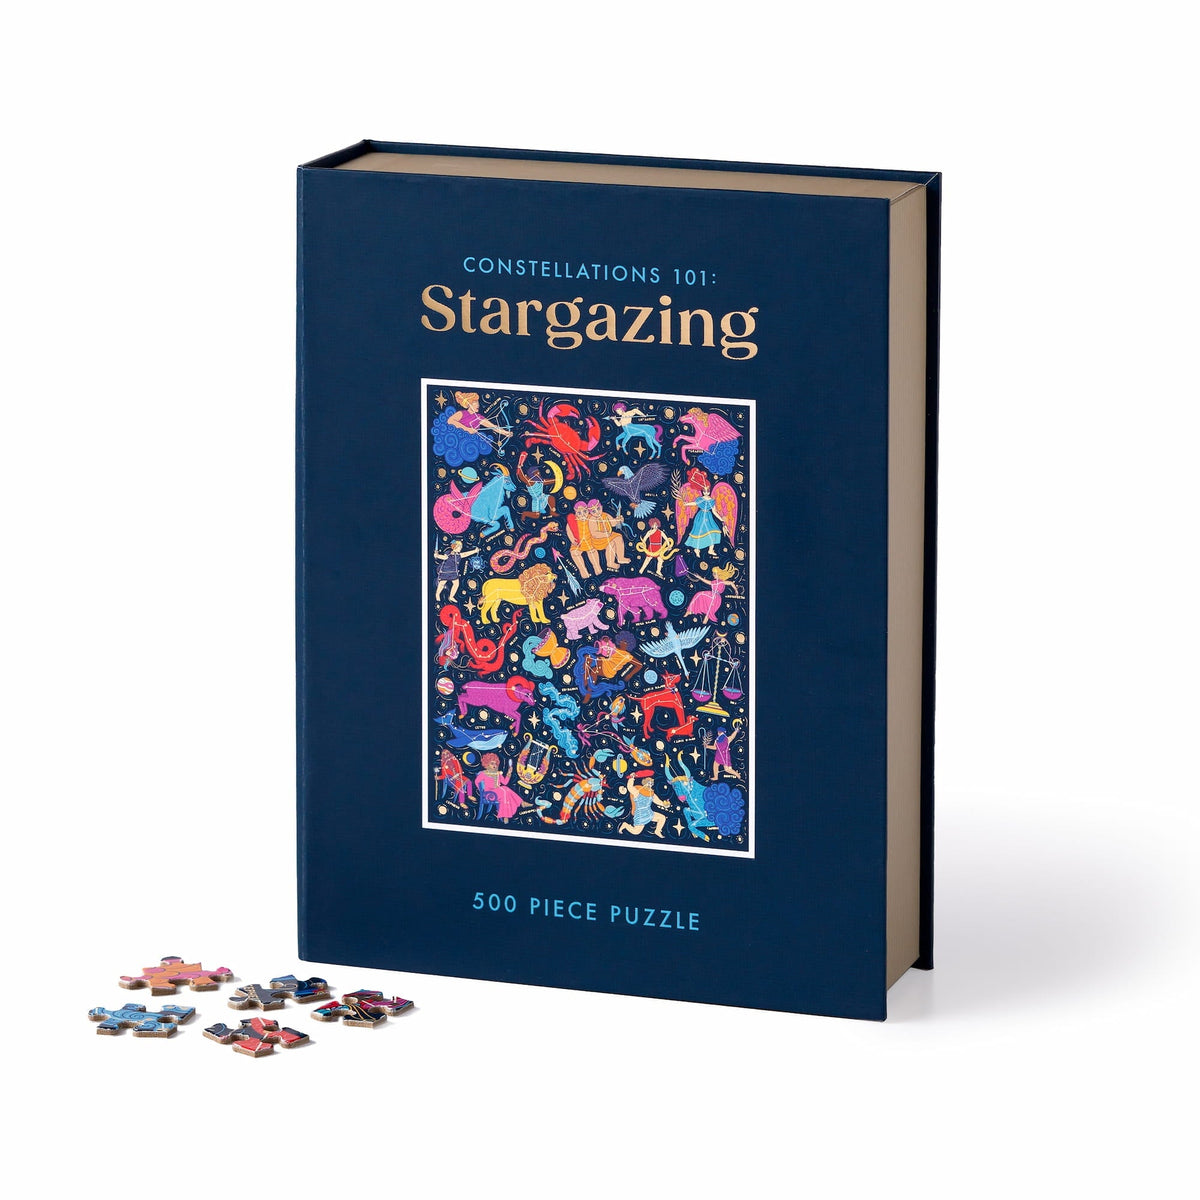 "Constellations 101: Stargazing" 500 Piece Book Puzzle